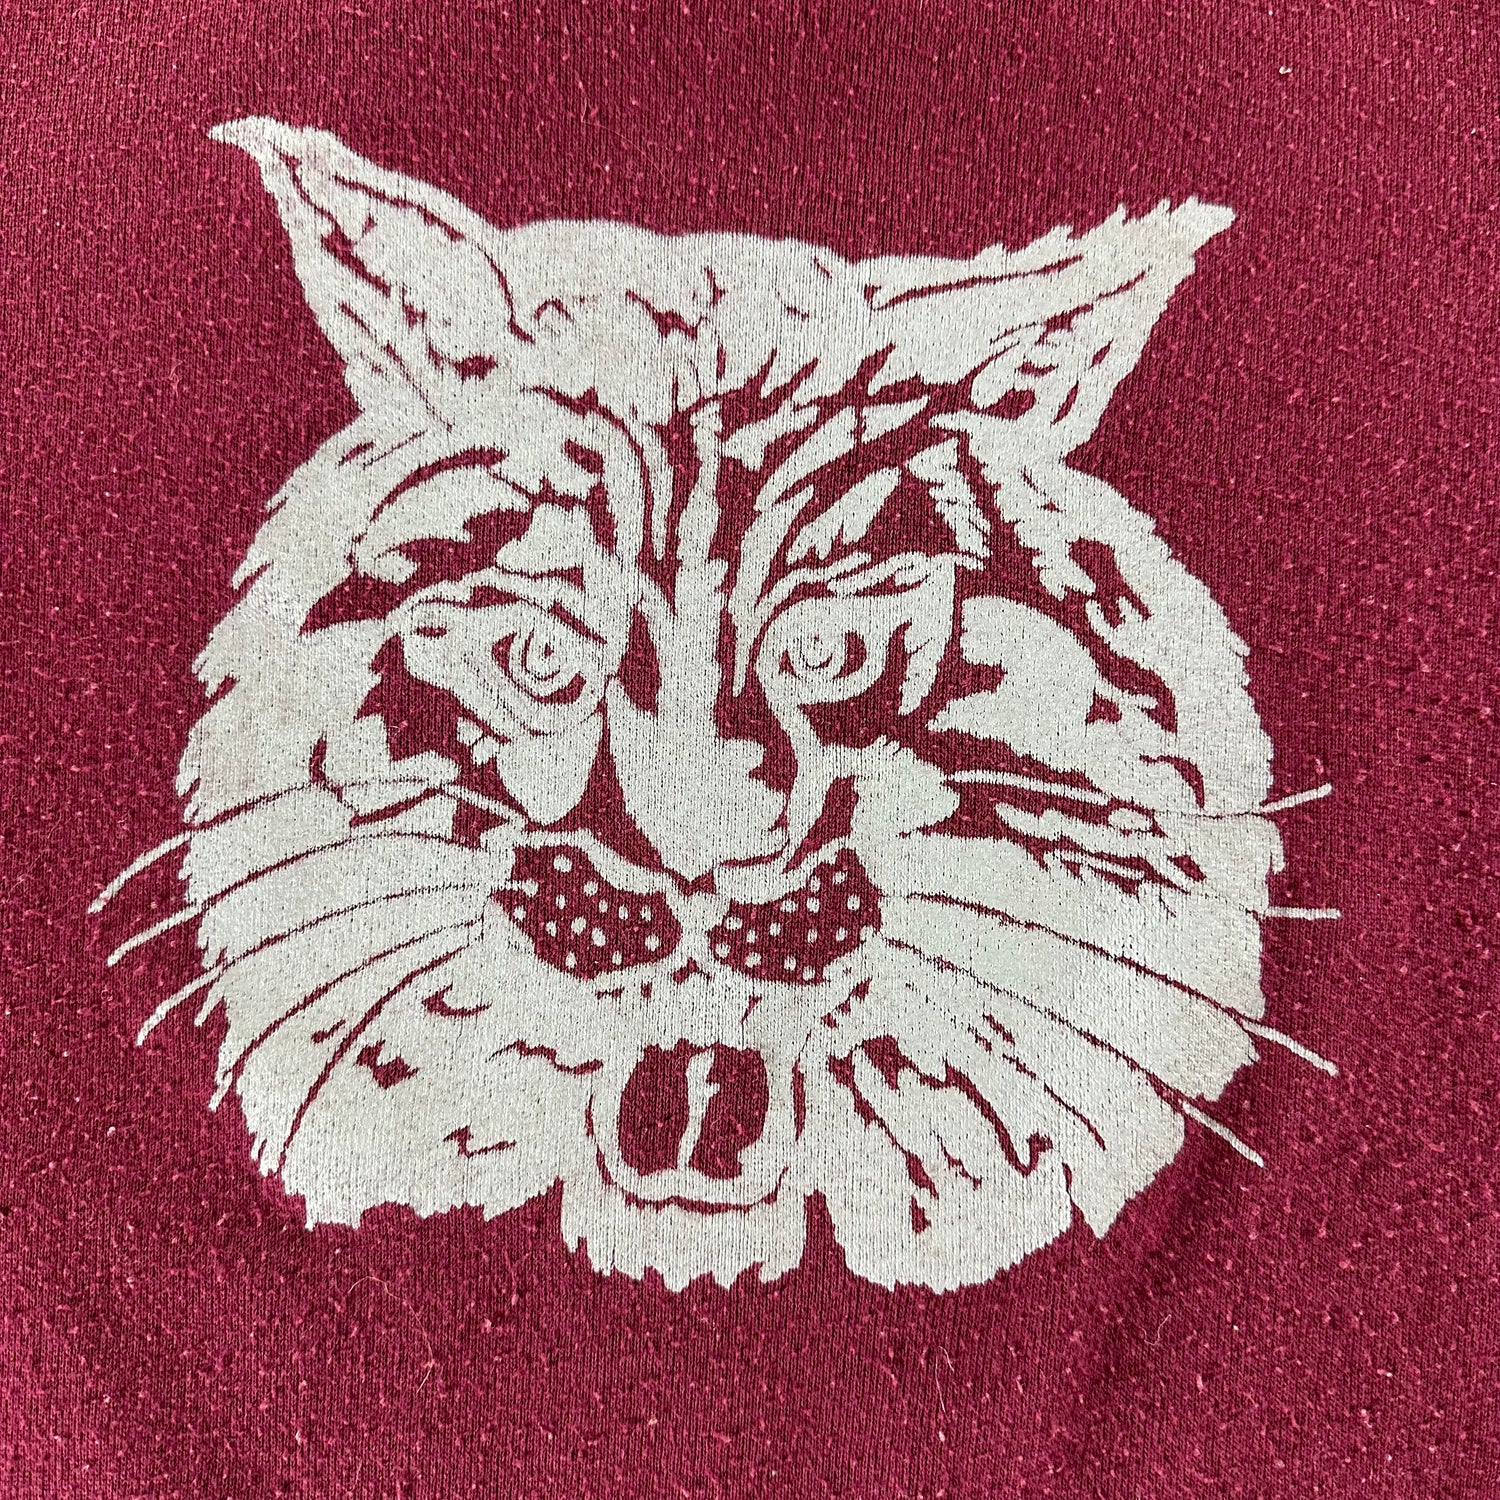 Vintage 1990s Wild Cat Sweatshirt size Large